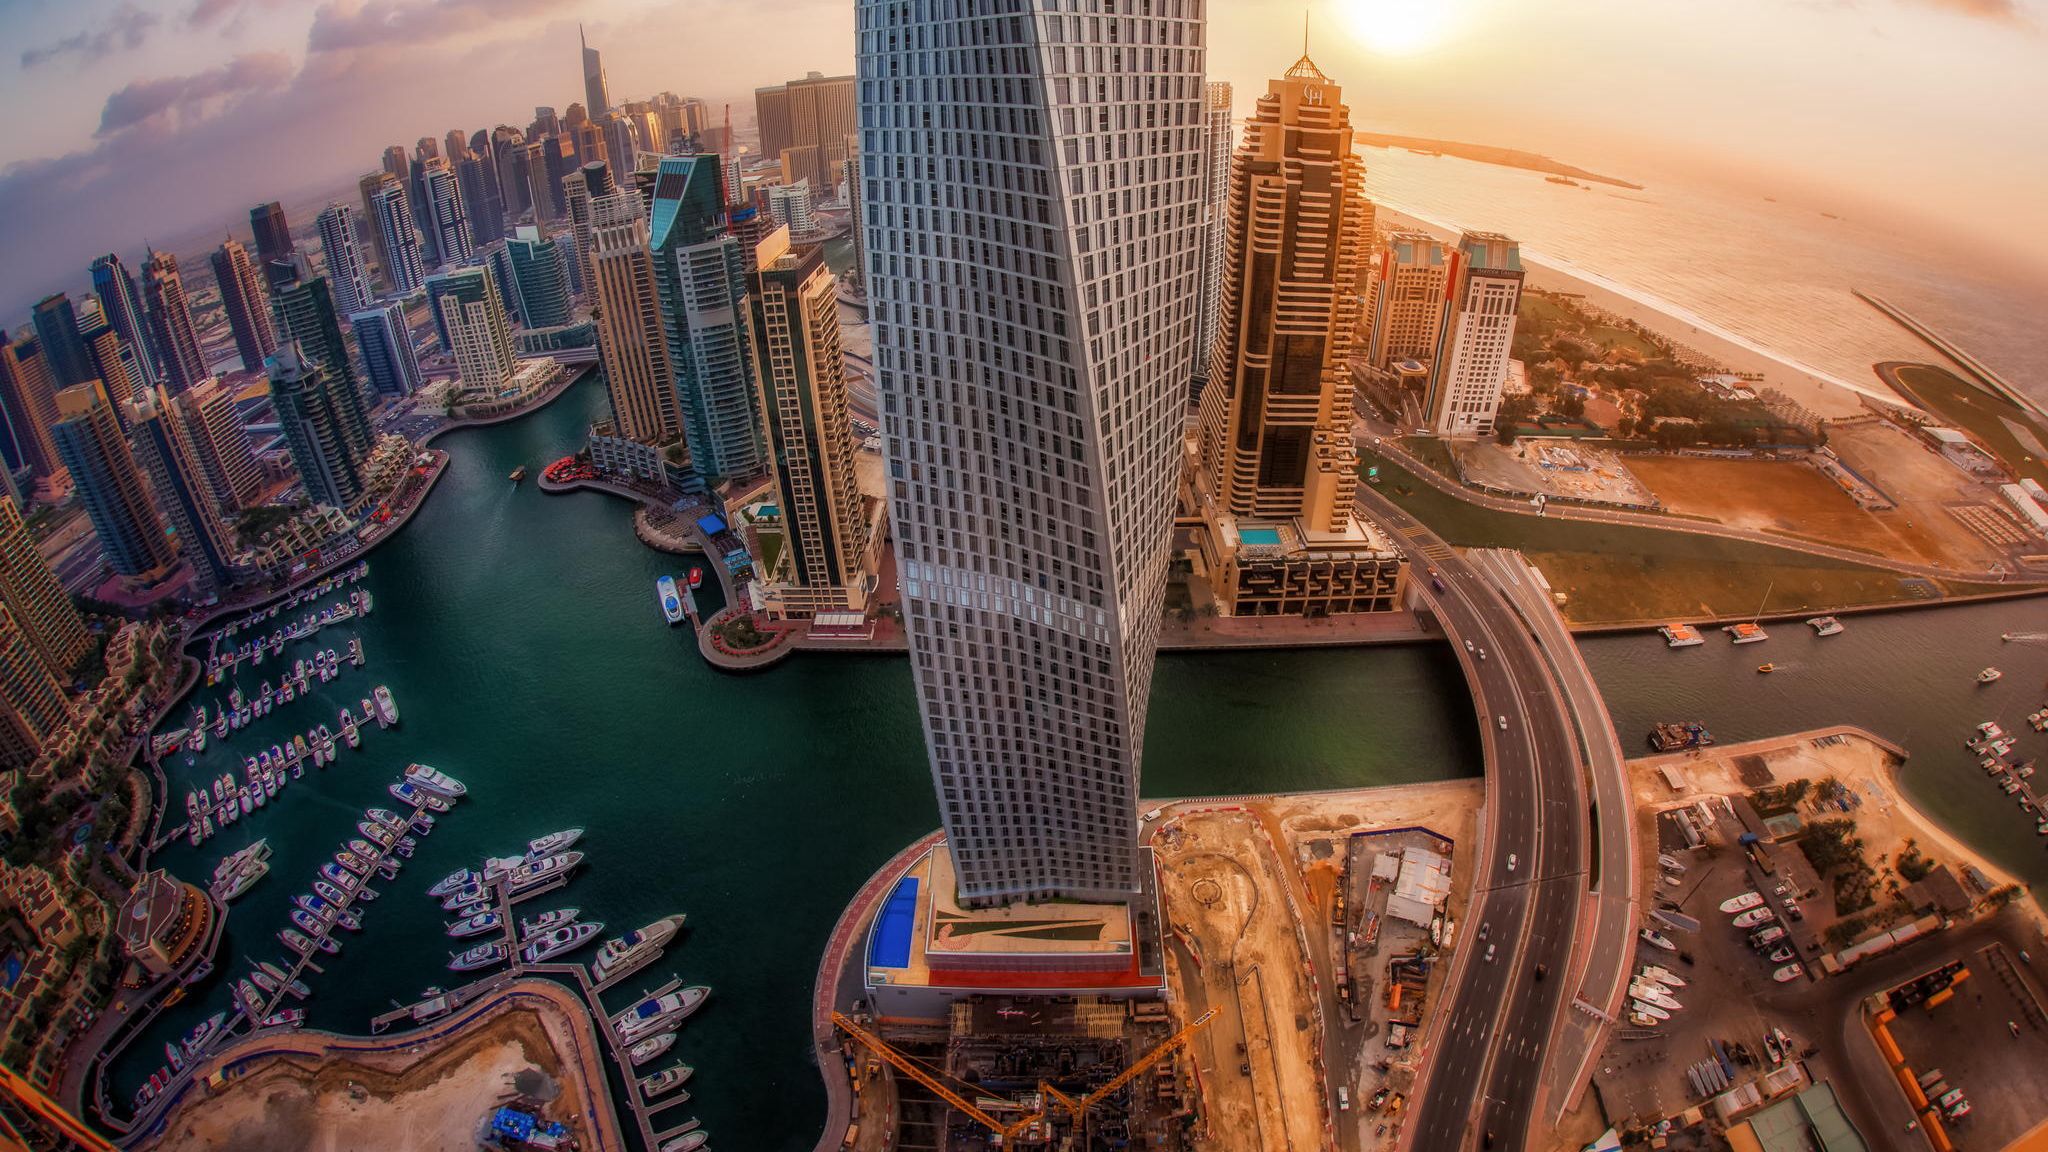 Download wallpaper 2048x1152 united arab emirates, skyscrapers, top view, sunrise, city, dubai ultrawide monitor HD background